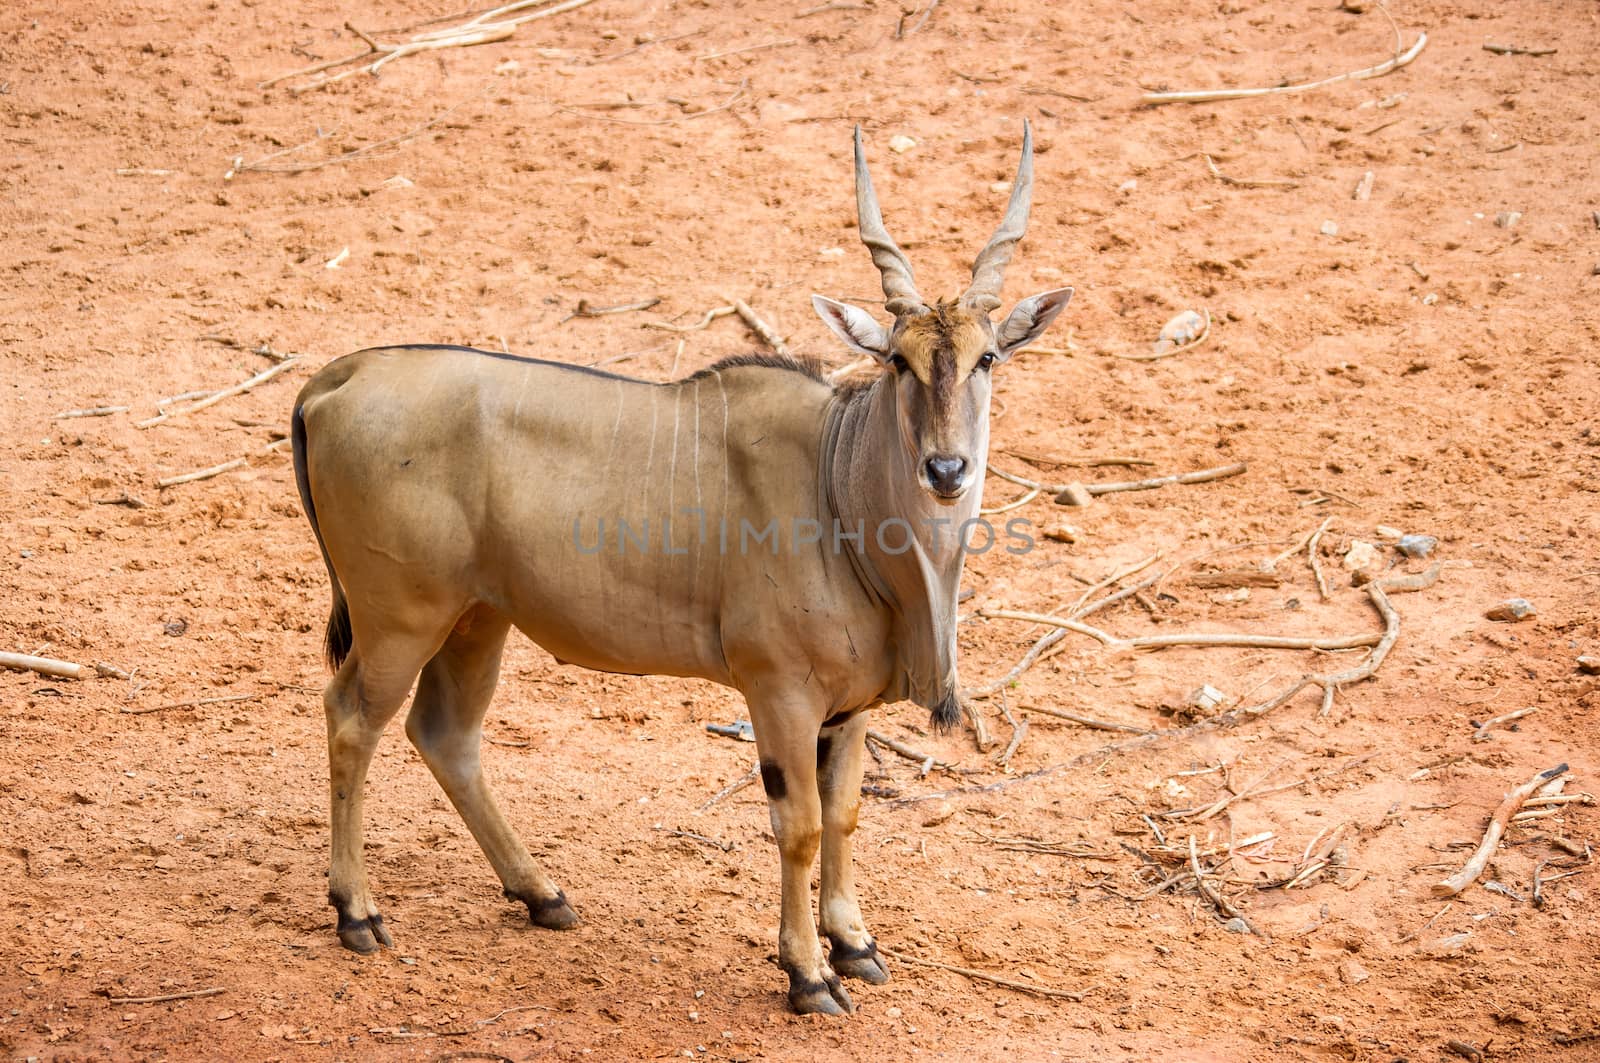 Adute antelope